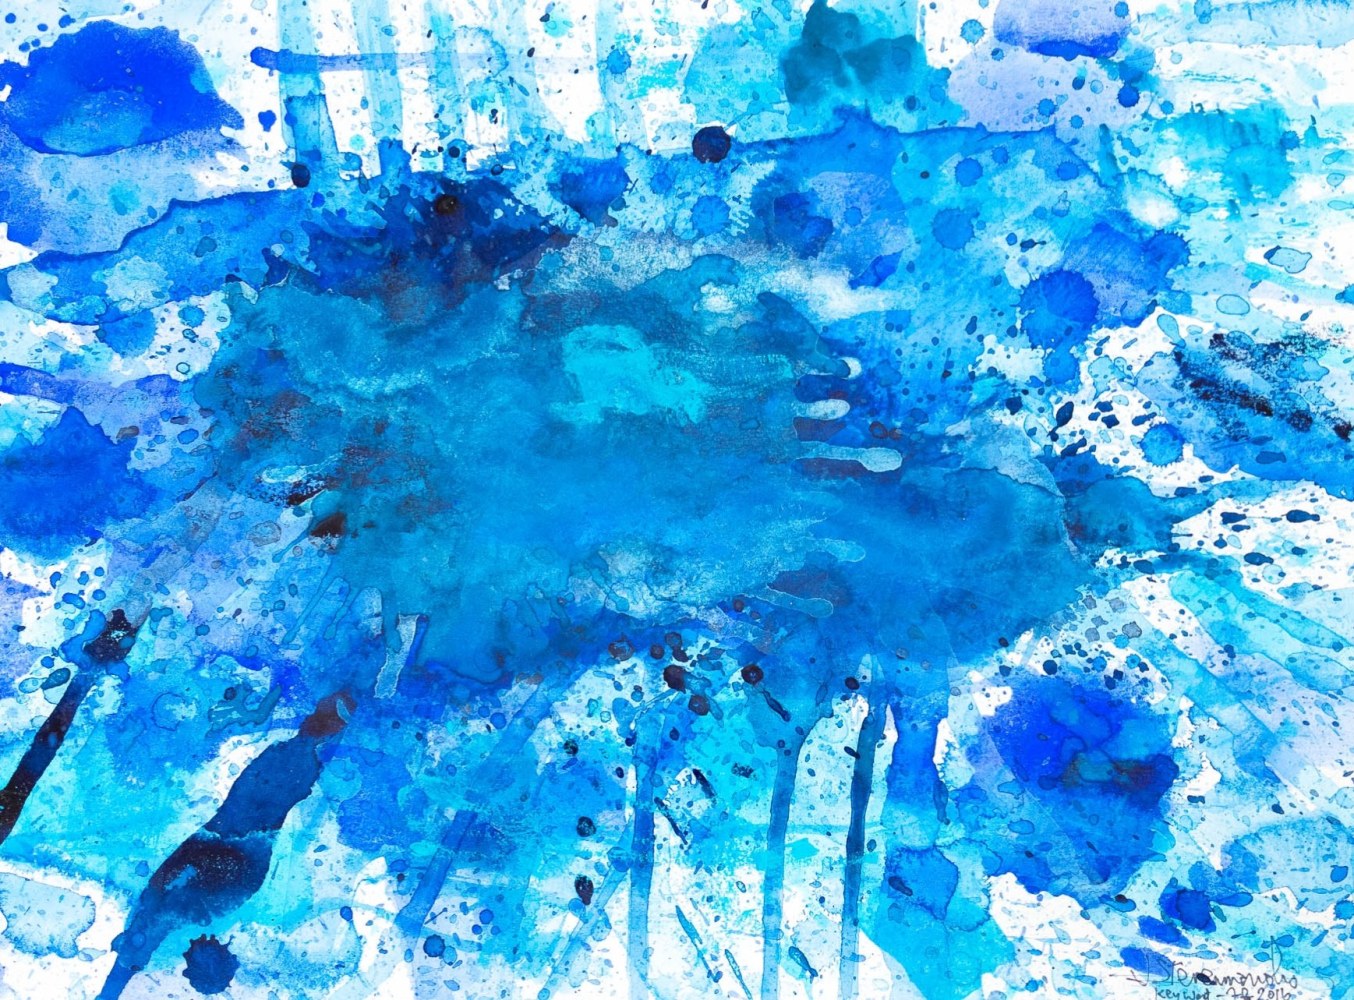 J. Steven Manolis, Splash-Key West (12.16.05), 2016, Watercolor, Acrylic and Gouache on paper, 12 x 16 inches, blue abstract watercolor, abstract expressionism art